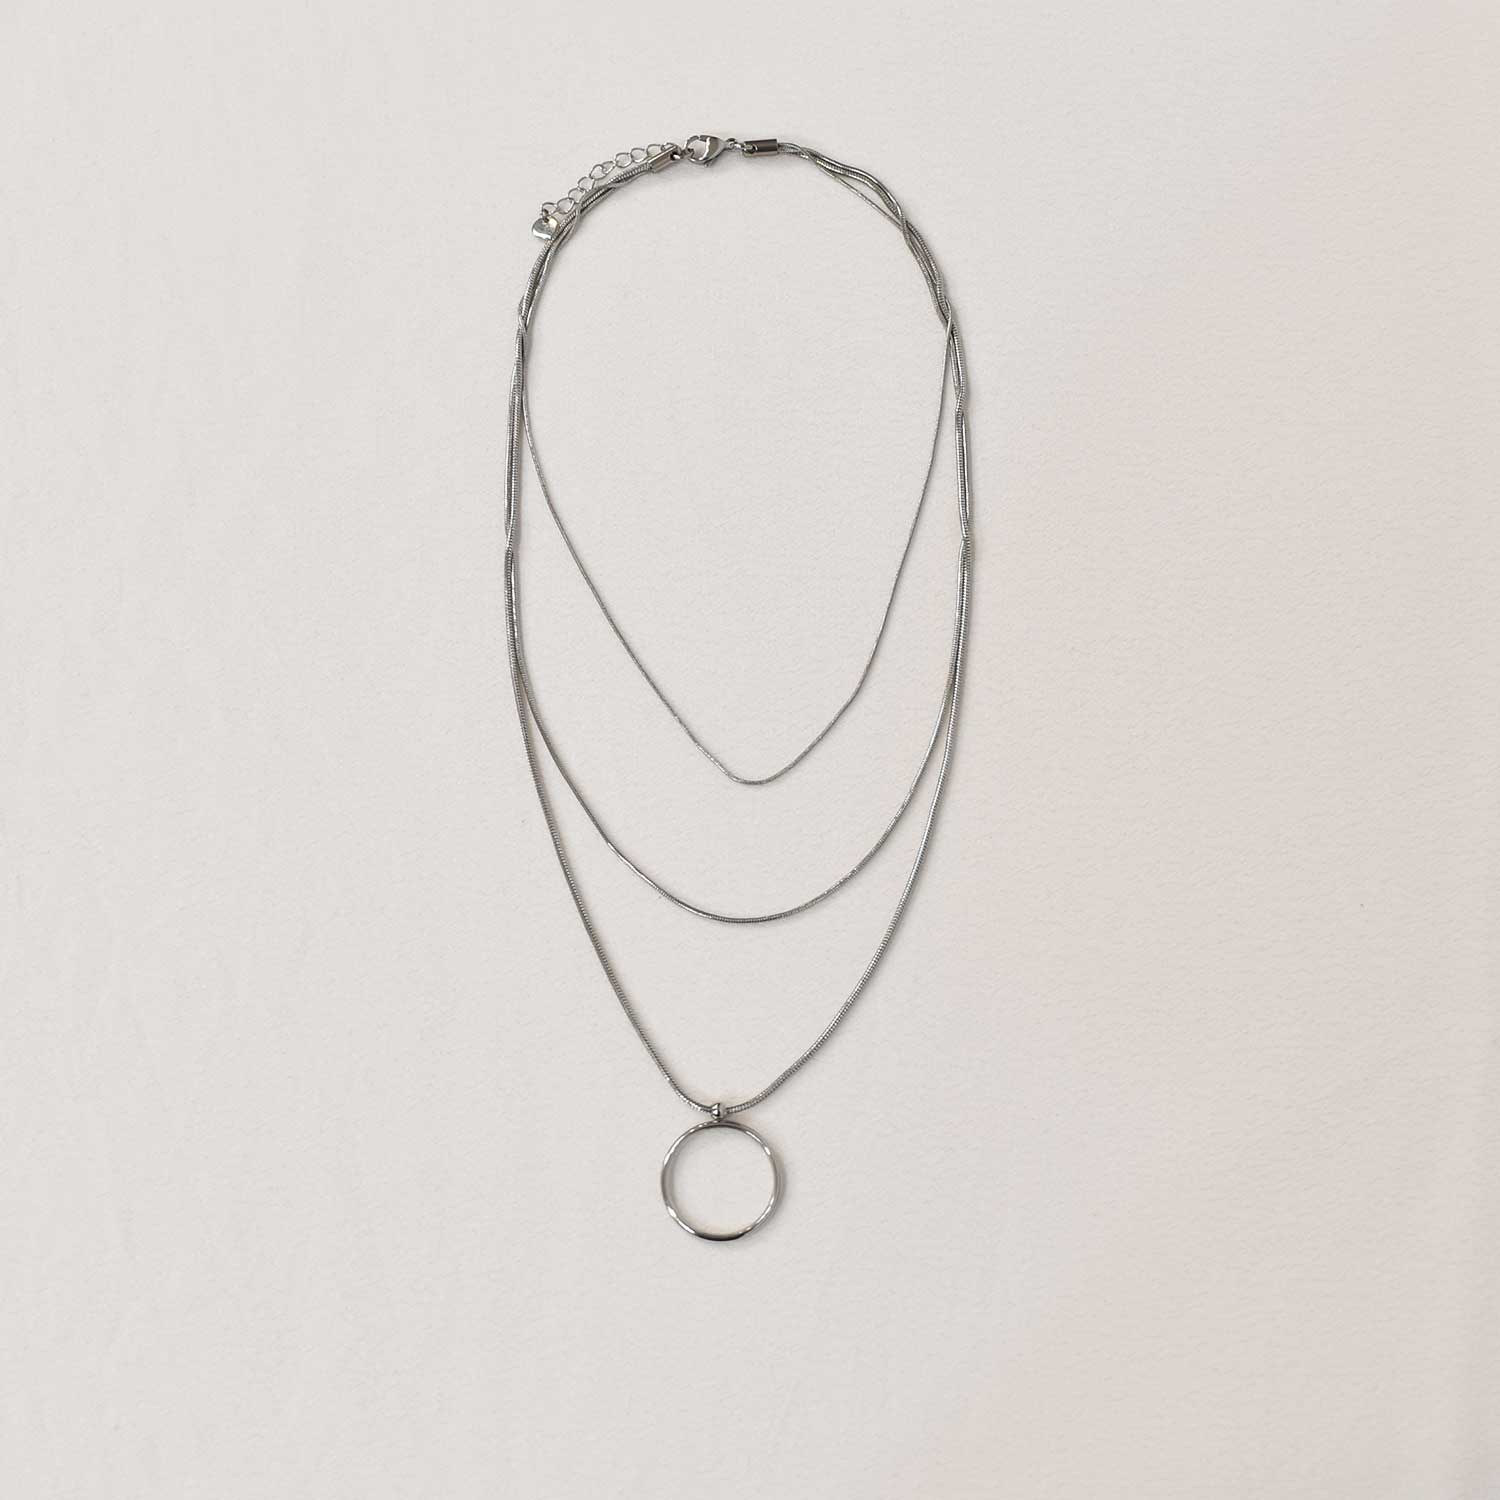 Triple hoop necklace
